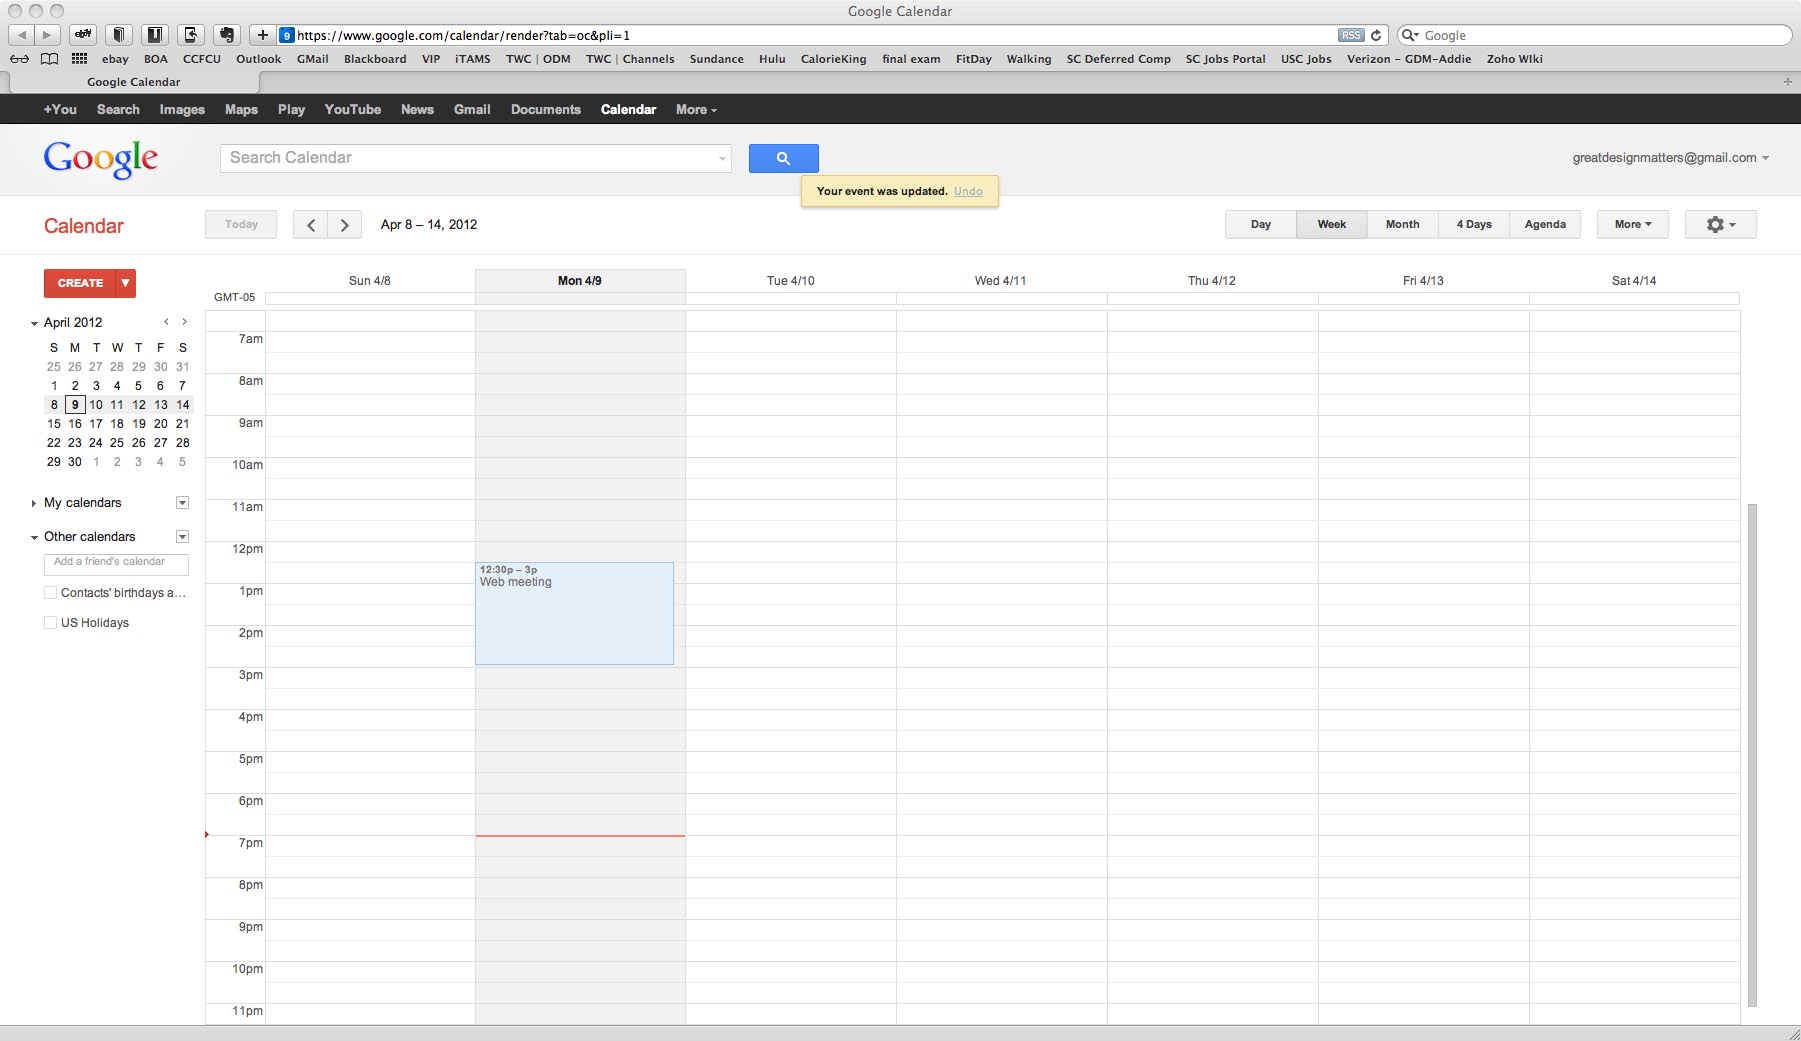 Larger view of Google Calendar site window